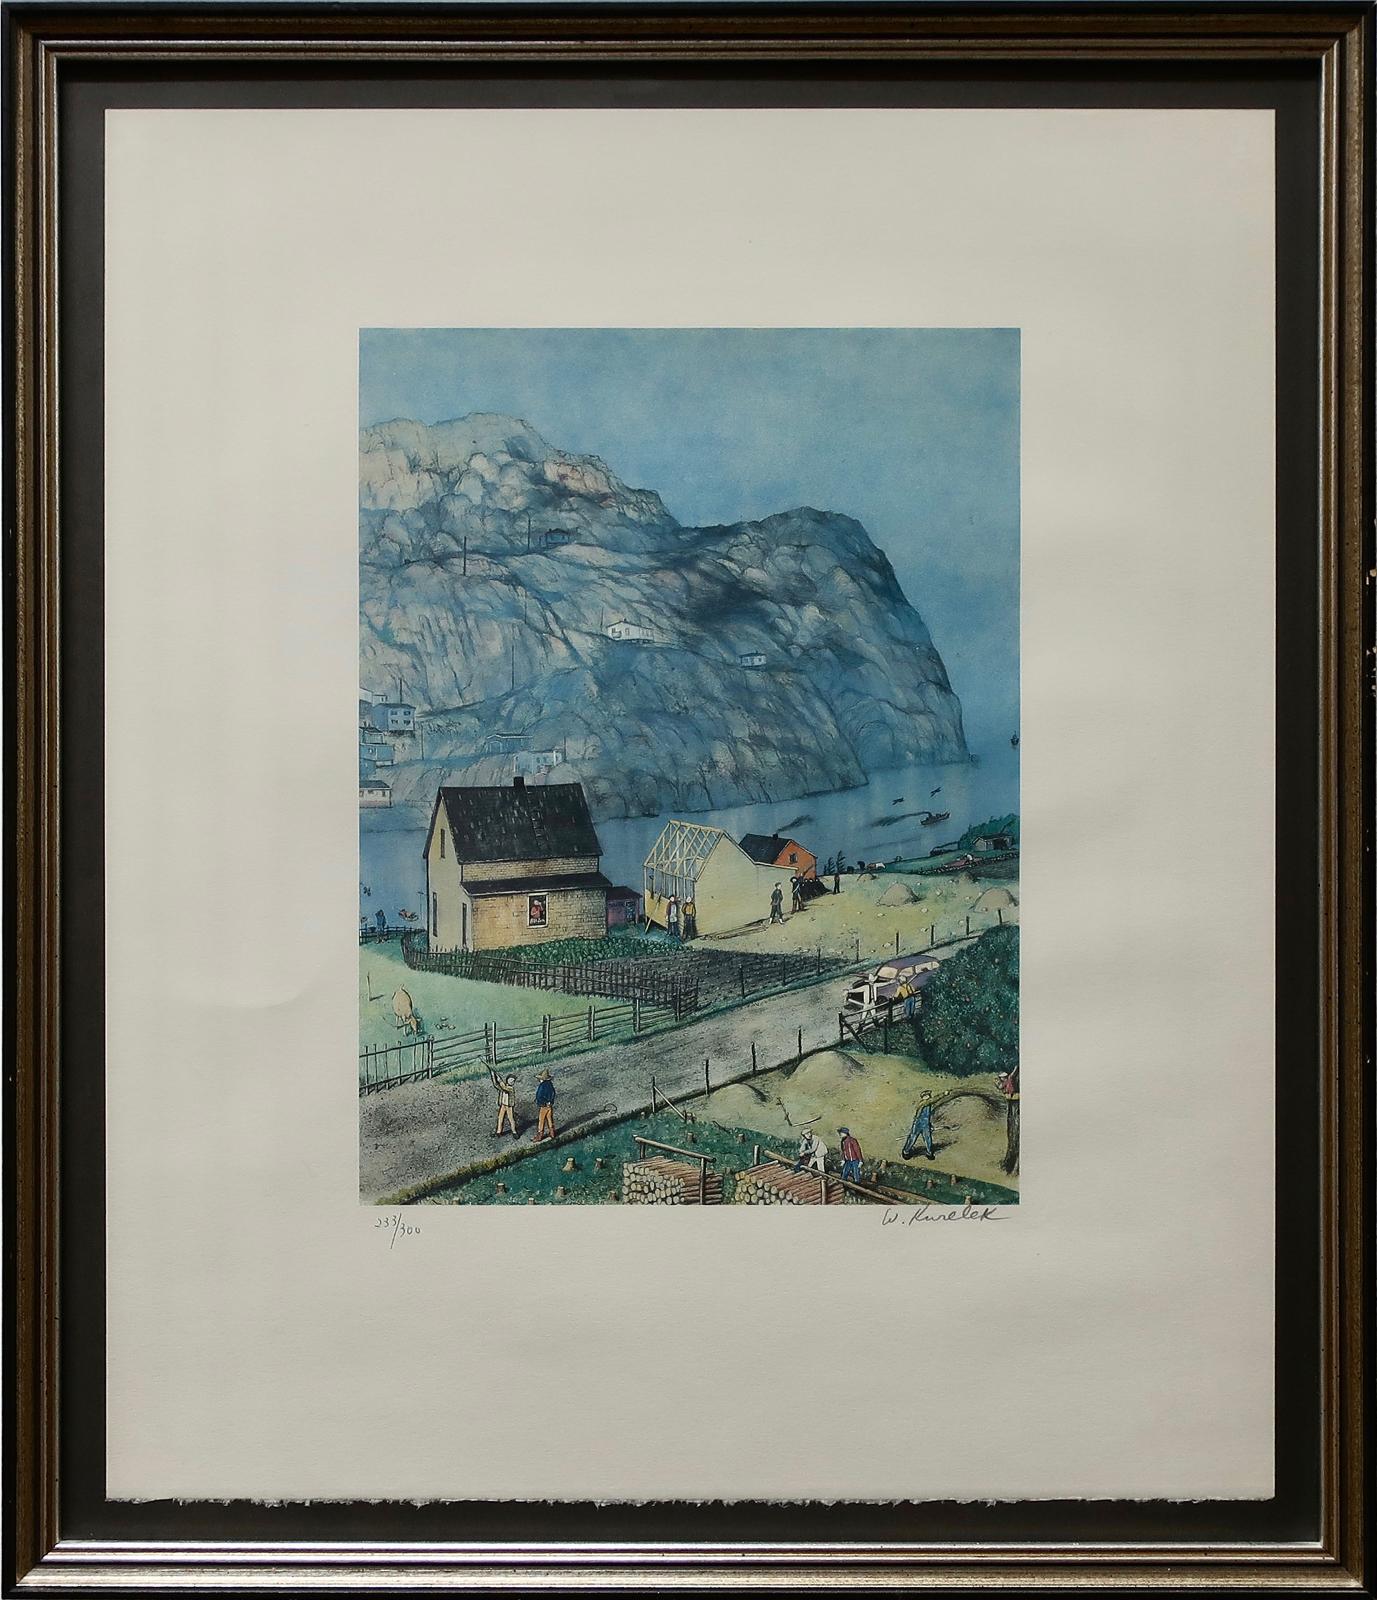 William Kurelek (1927-1977) - Village By The Sea